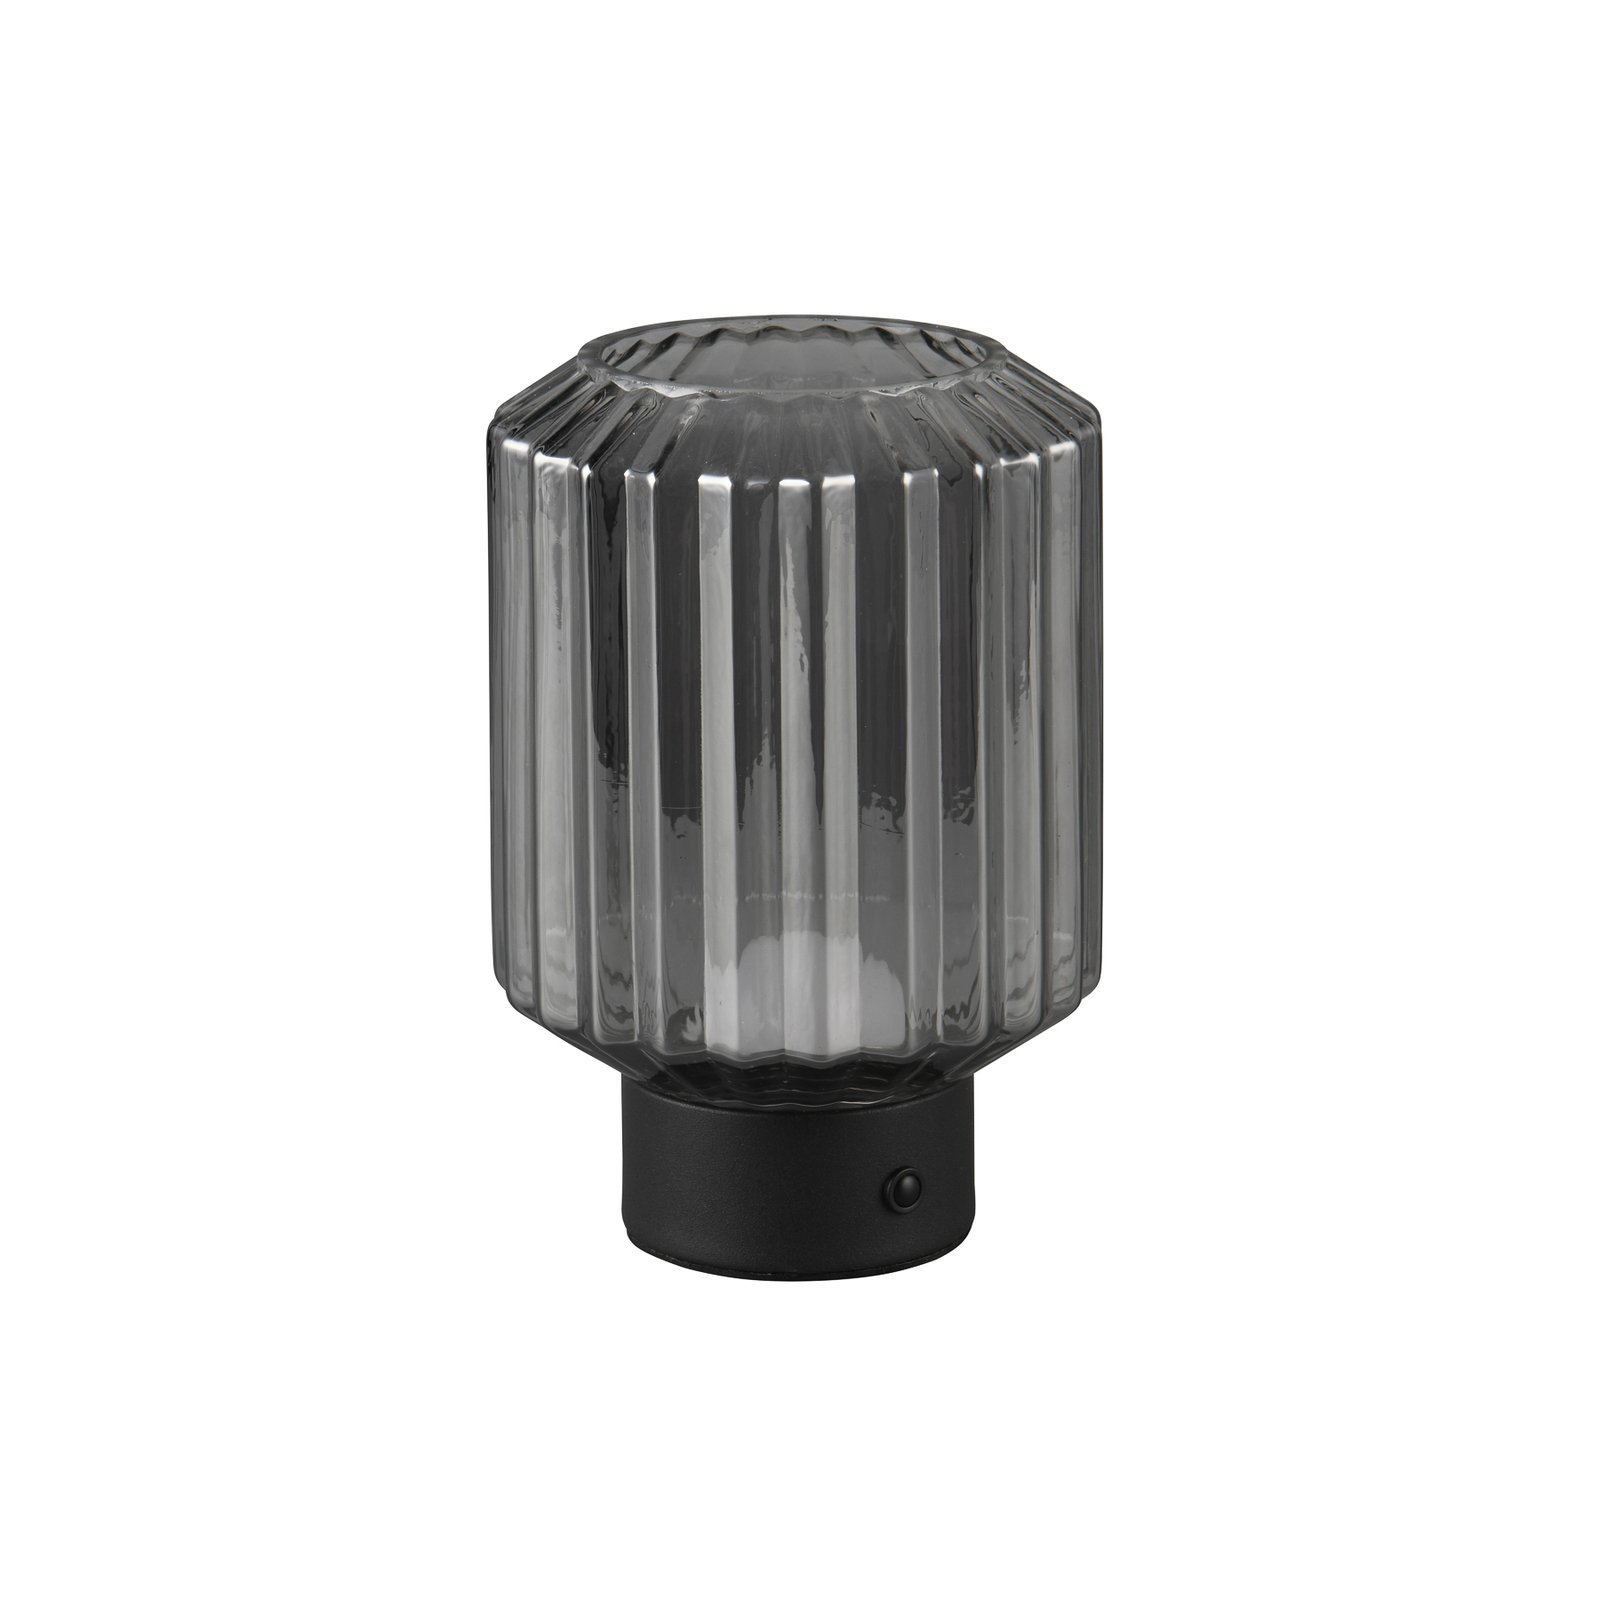 Lord LED tafellamp, zwart/rook, hoogte 19,5 cm, glas